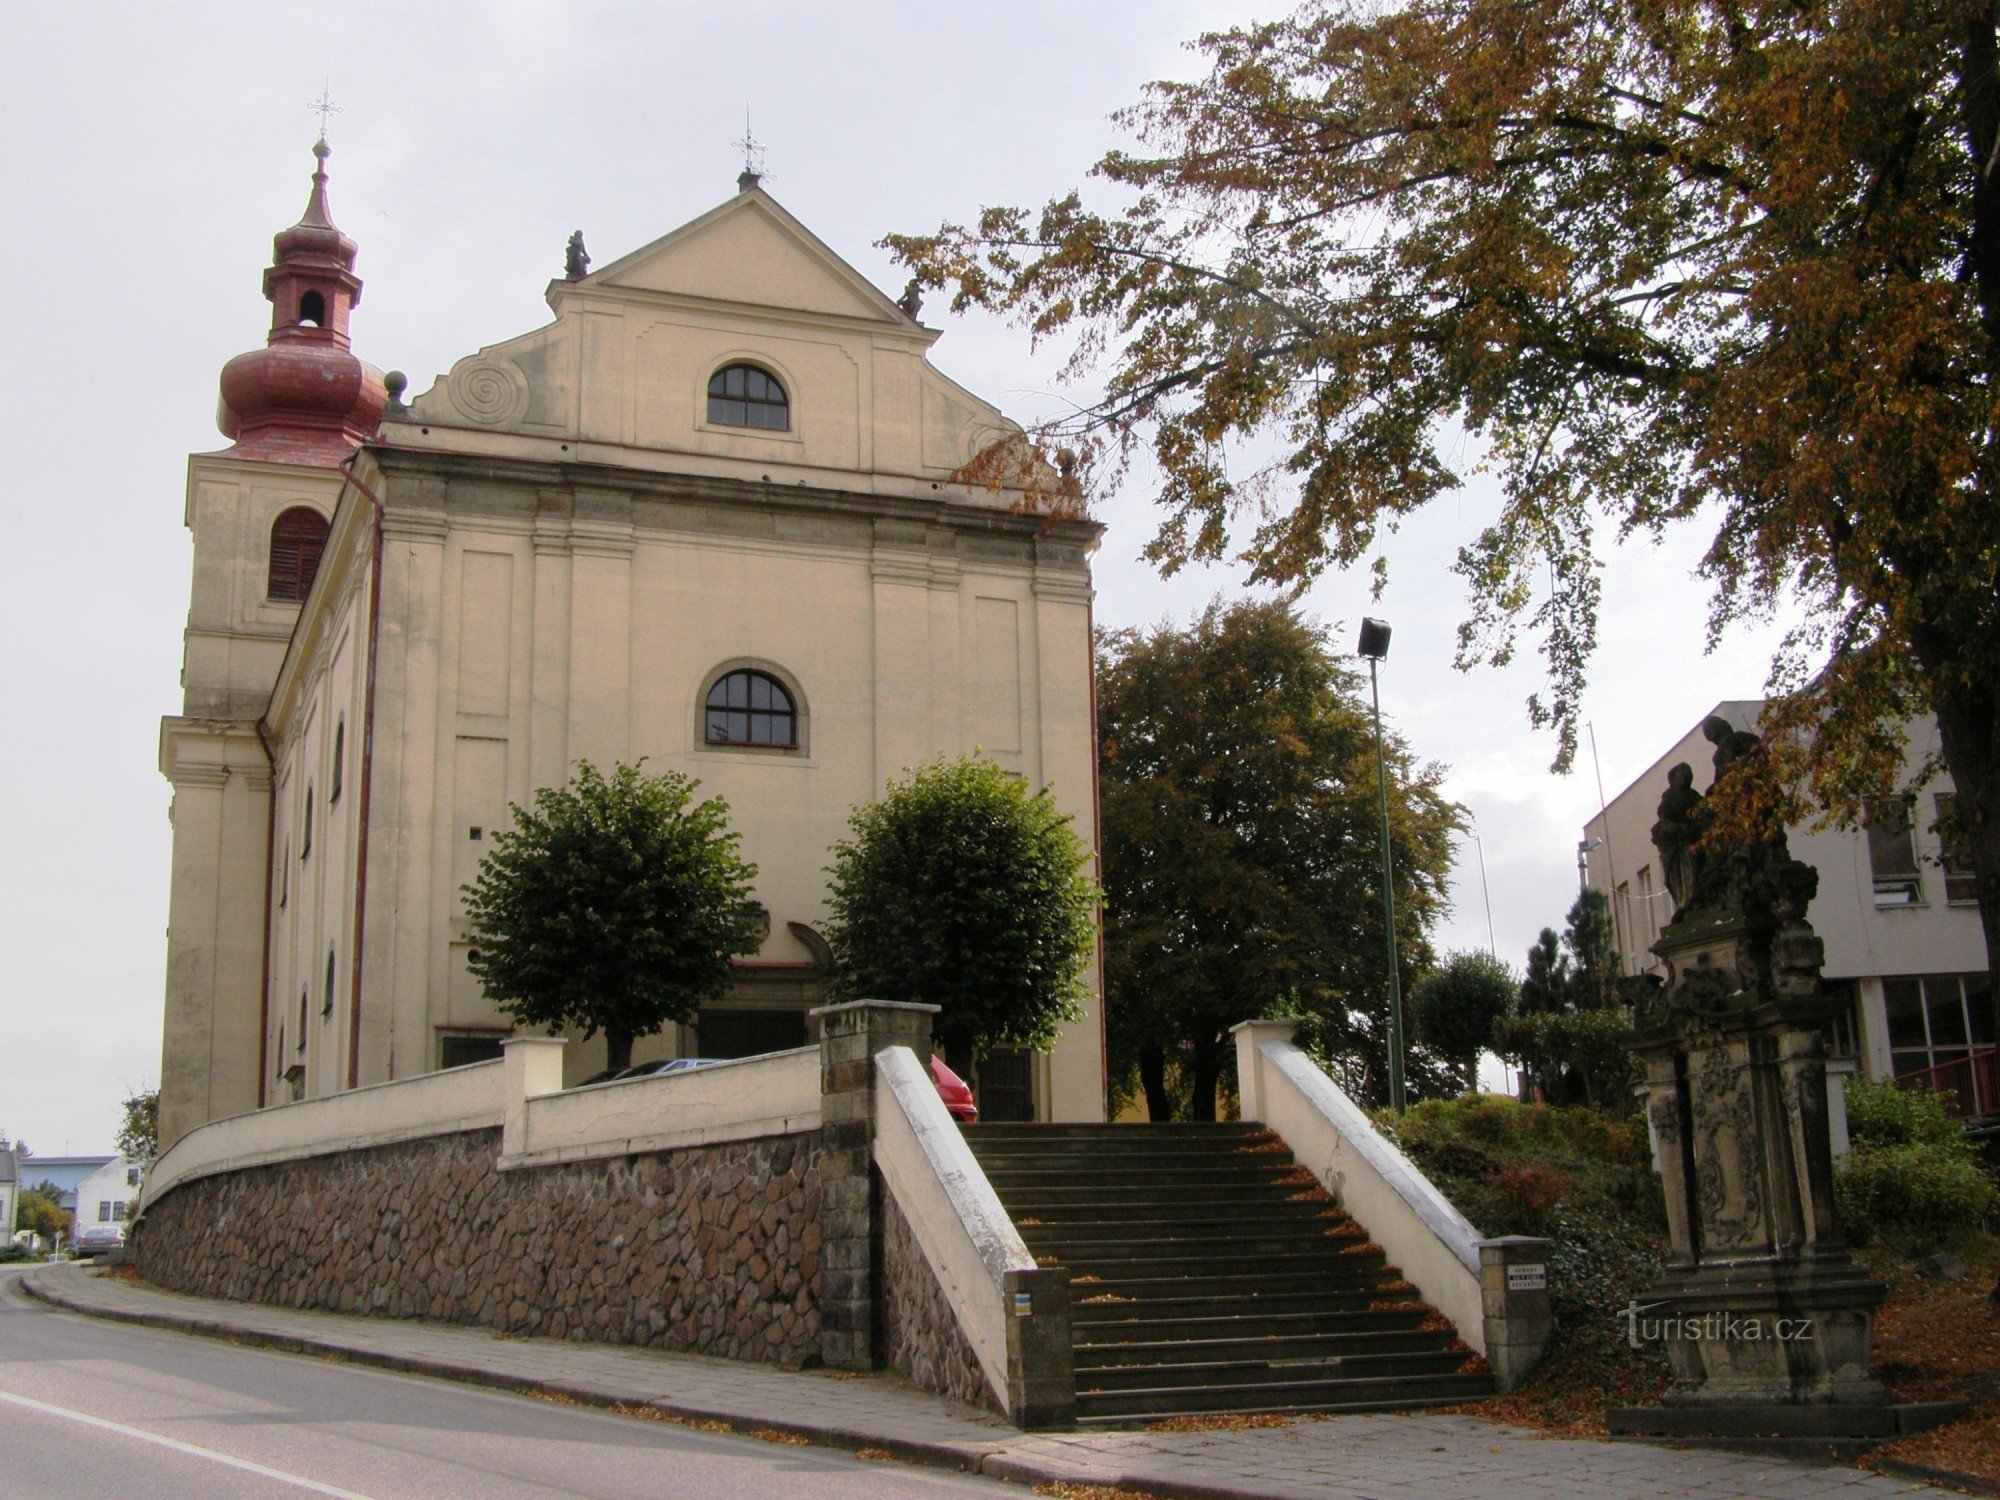 Vamberk - Nhà thờ St. Procopius